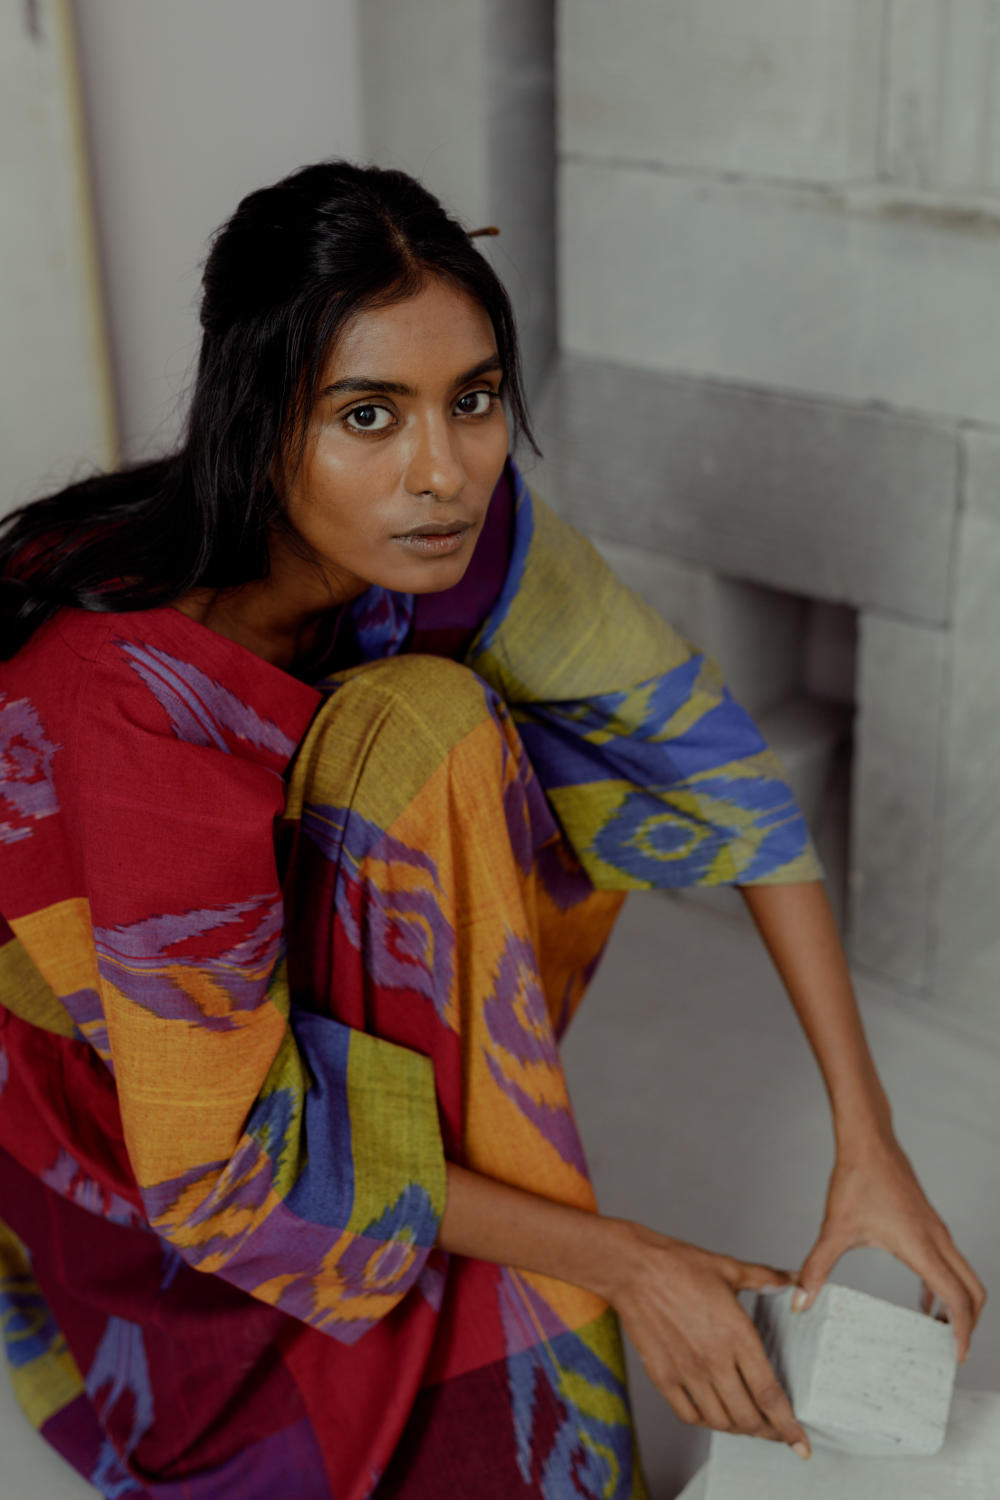 Bougainvillea Relaxed Dress Fashion Translate - Handwoven Ikat 